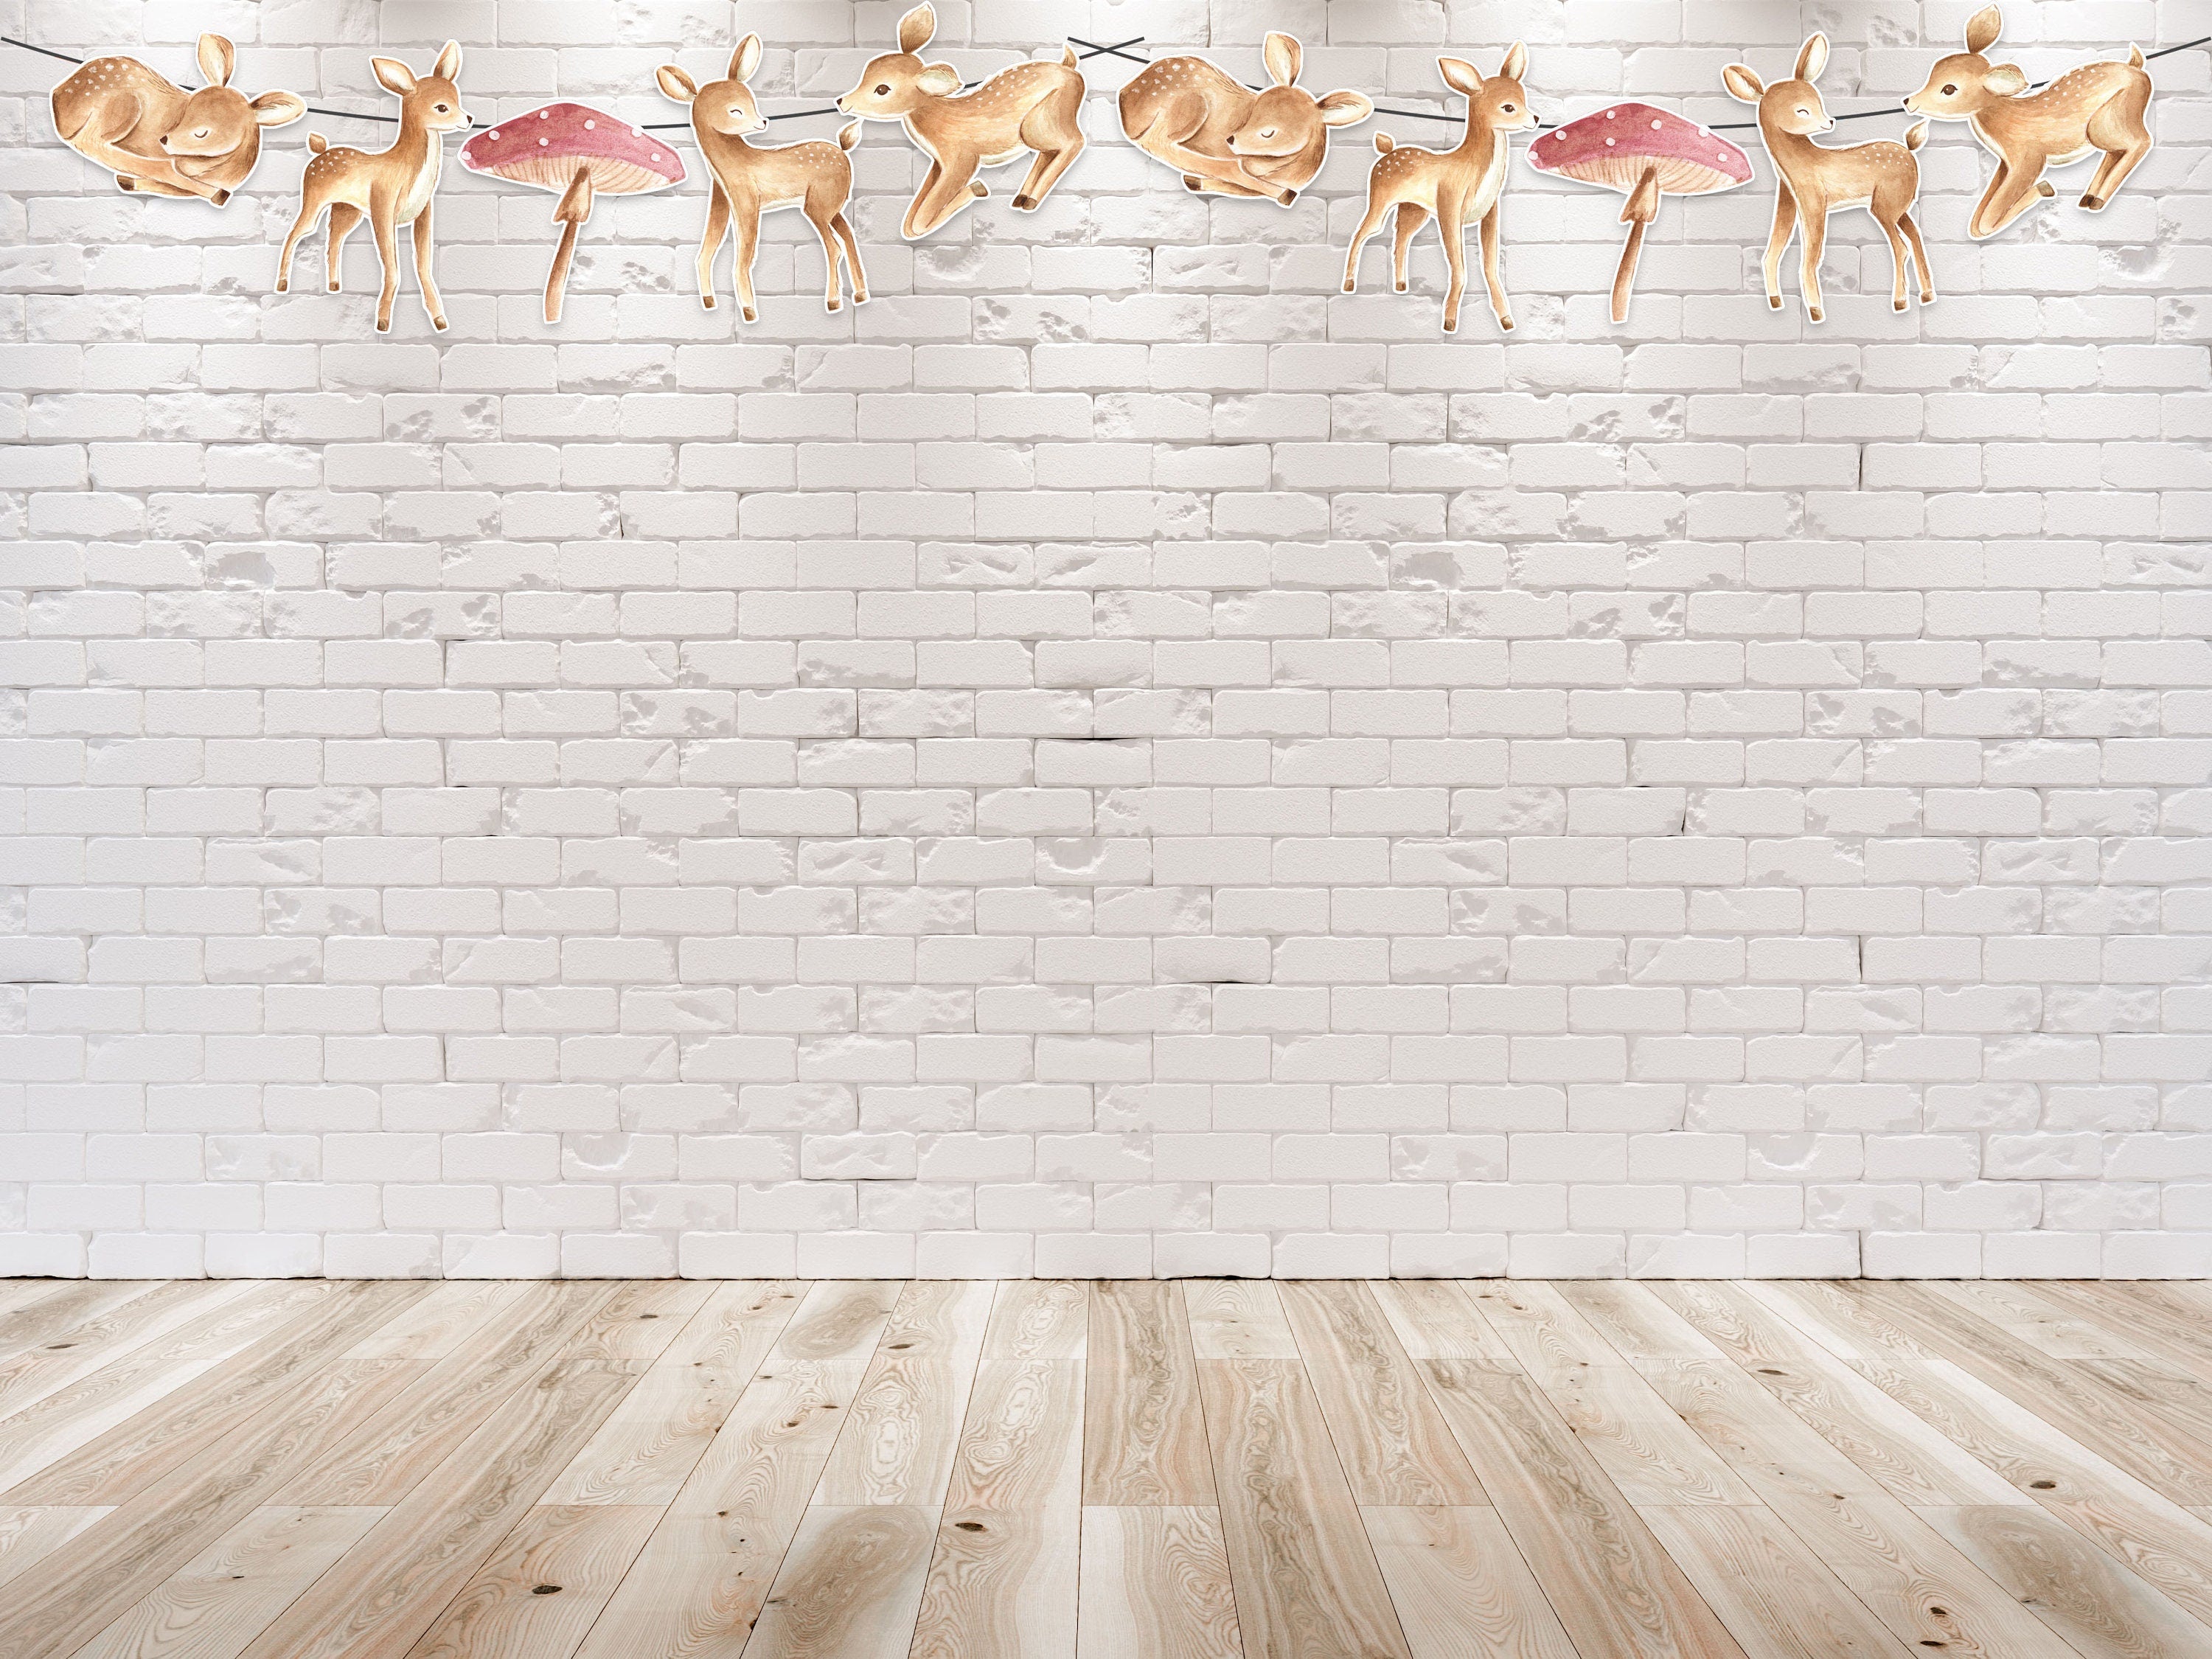 Enchanted Woodland Deer Cartoon Banner - Gentle Forest Decor for Children's Spaces